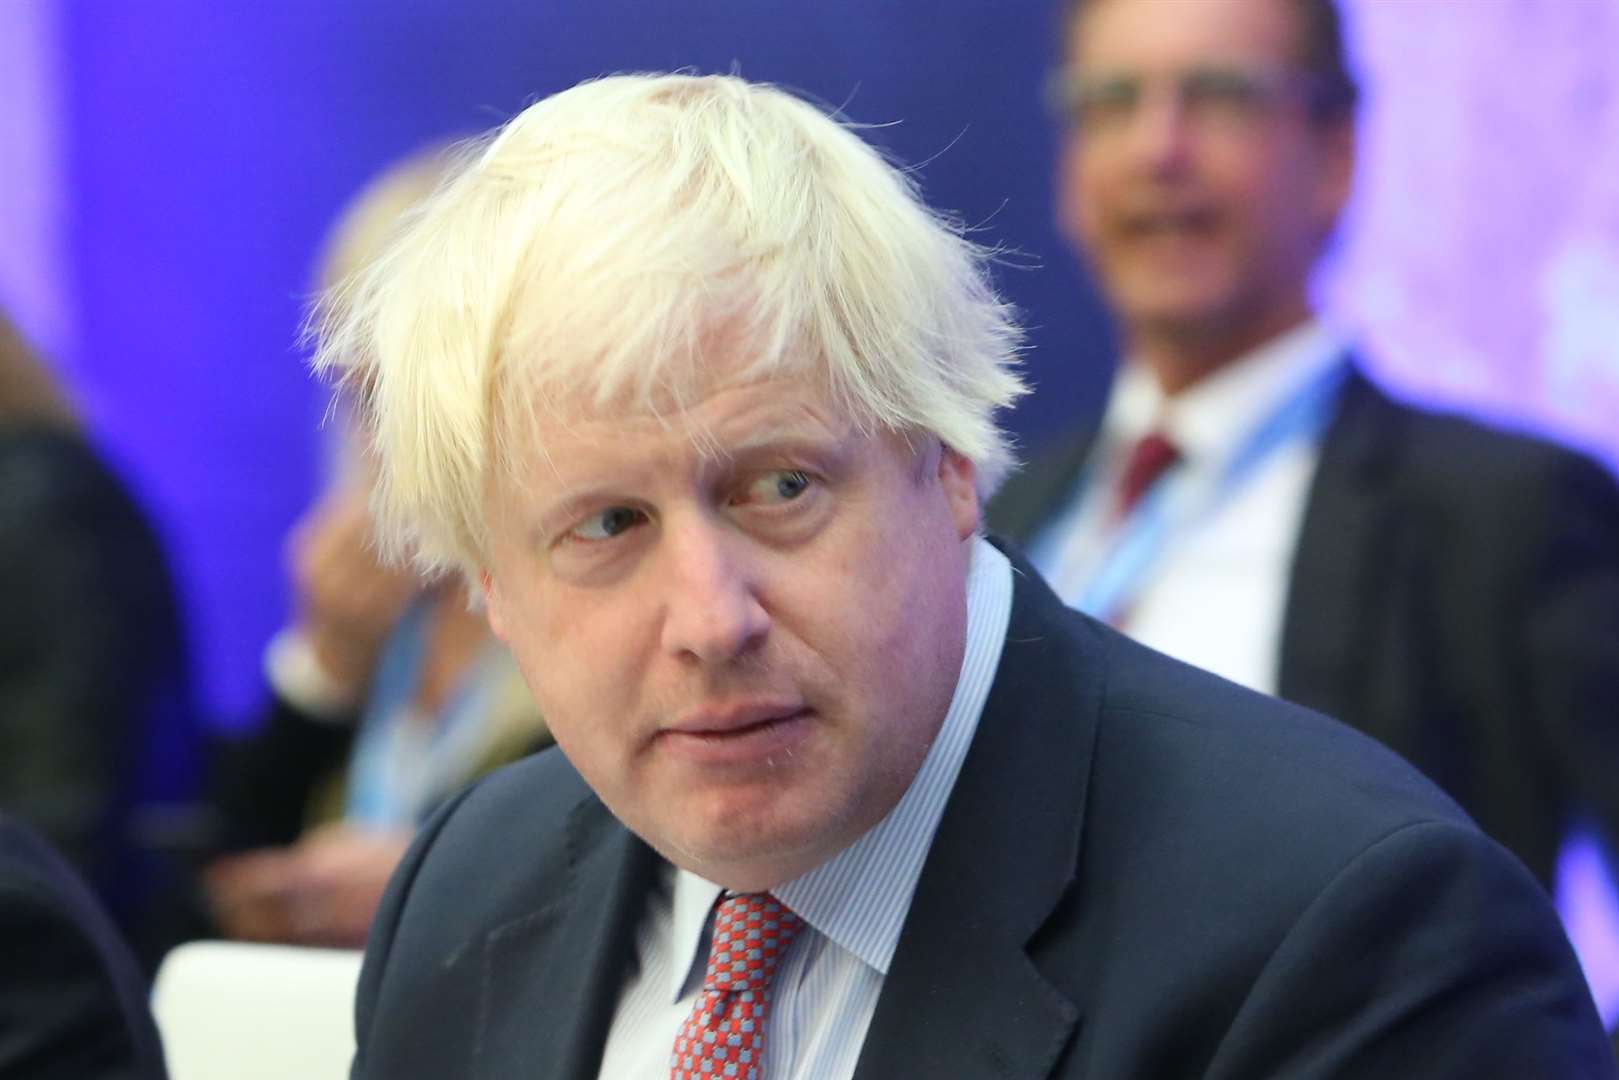 Former PM Boris Johnson is a self-confessed bus fan